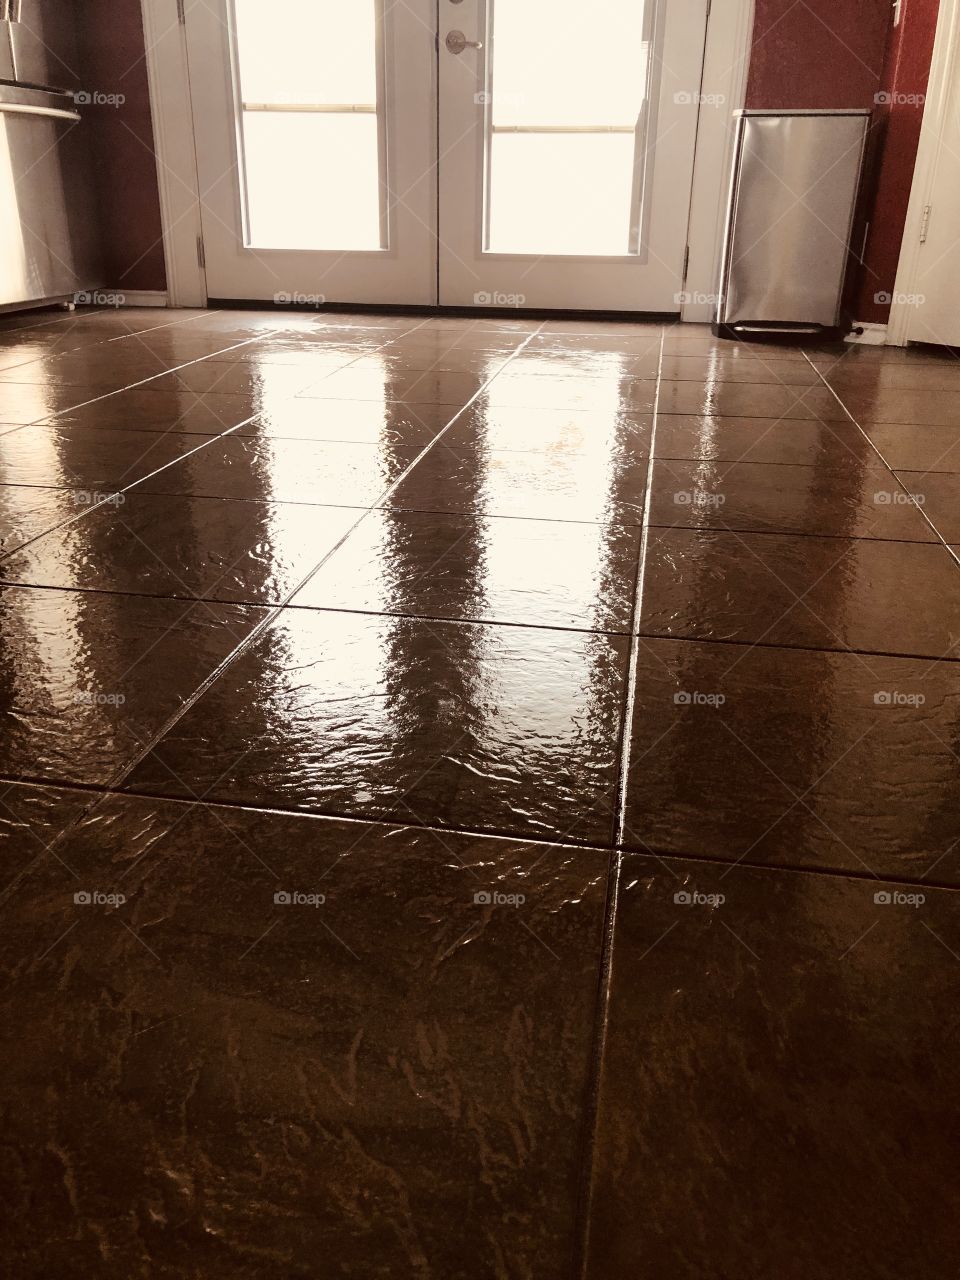 Mopped floor